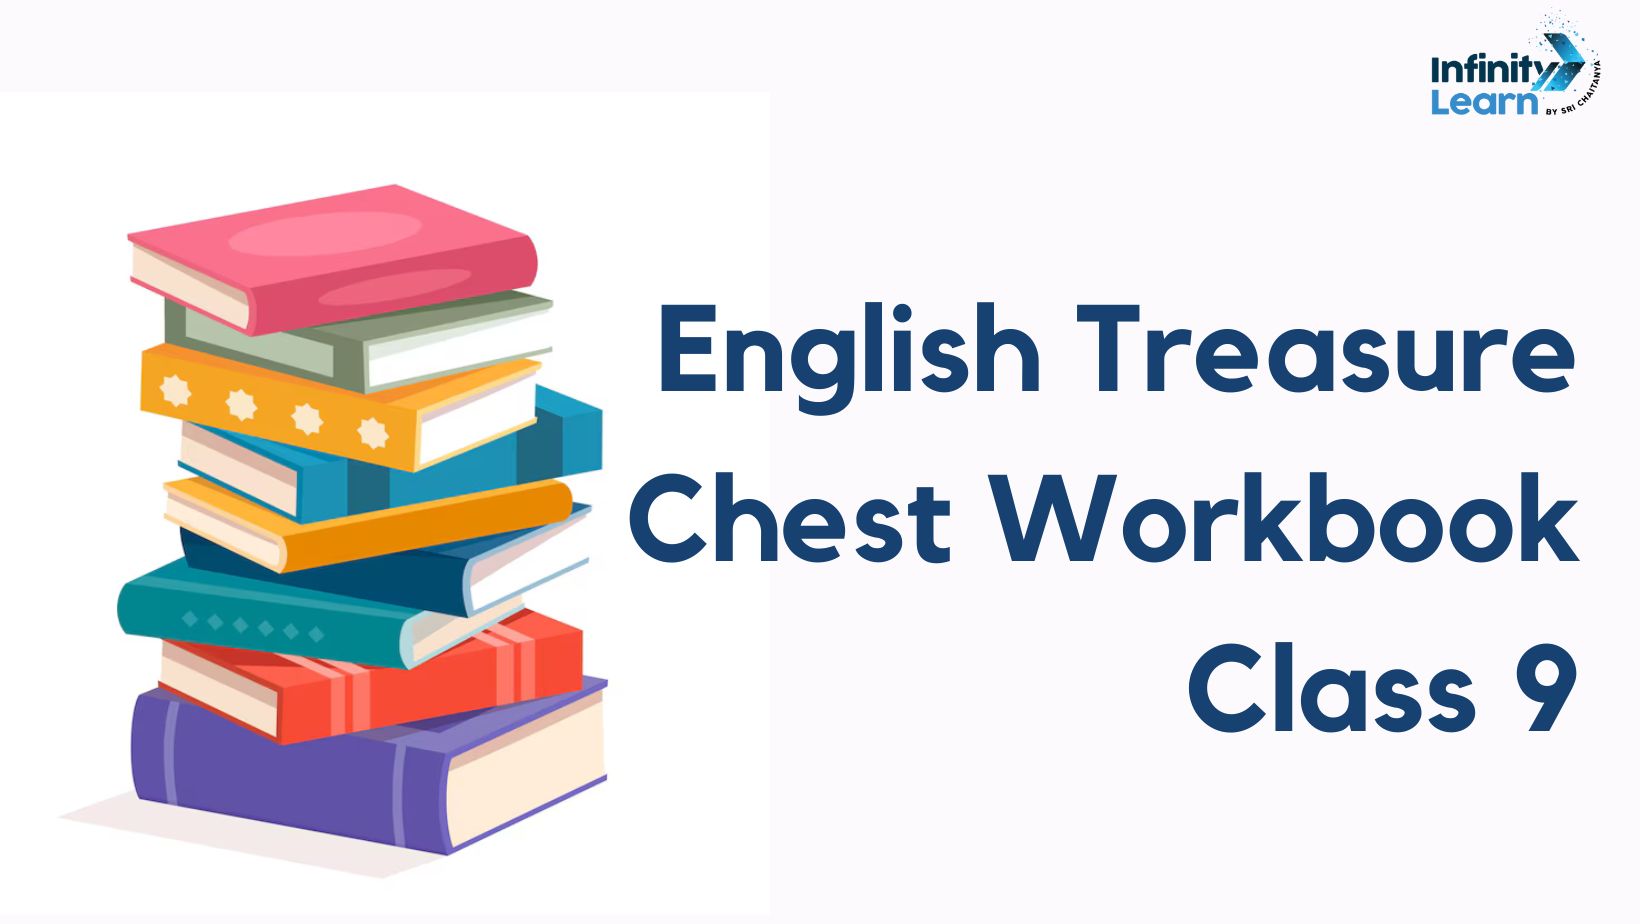 English Treasure Chest Workbook Class 9